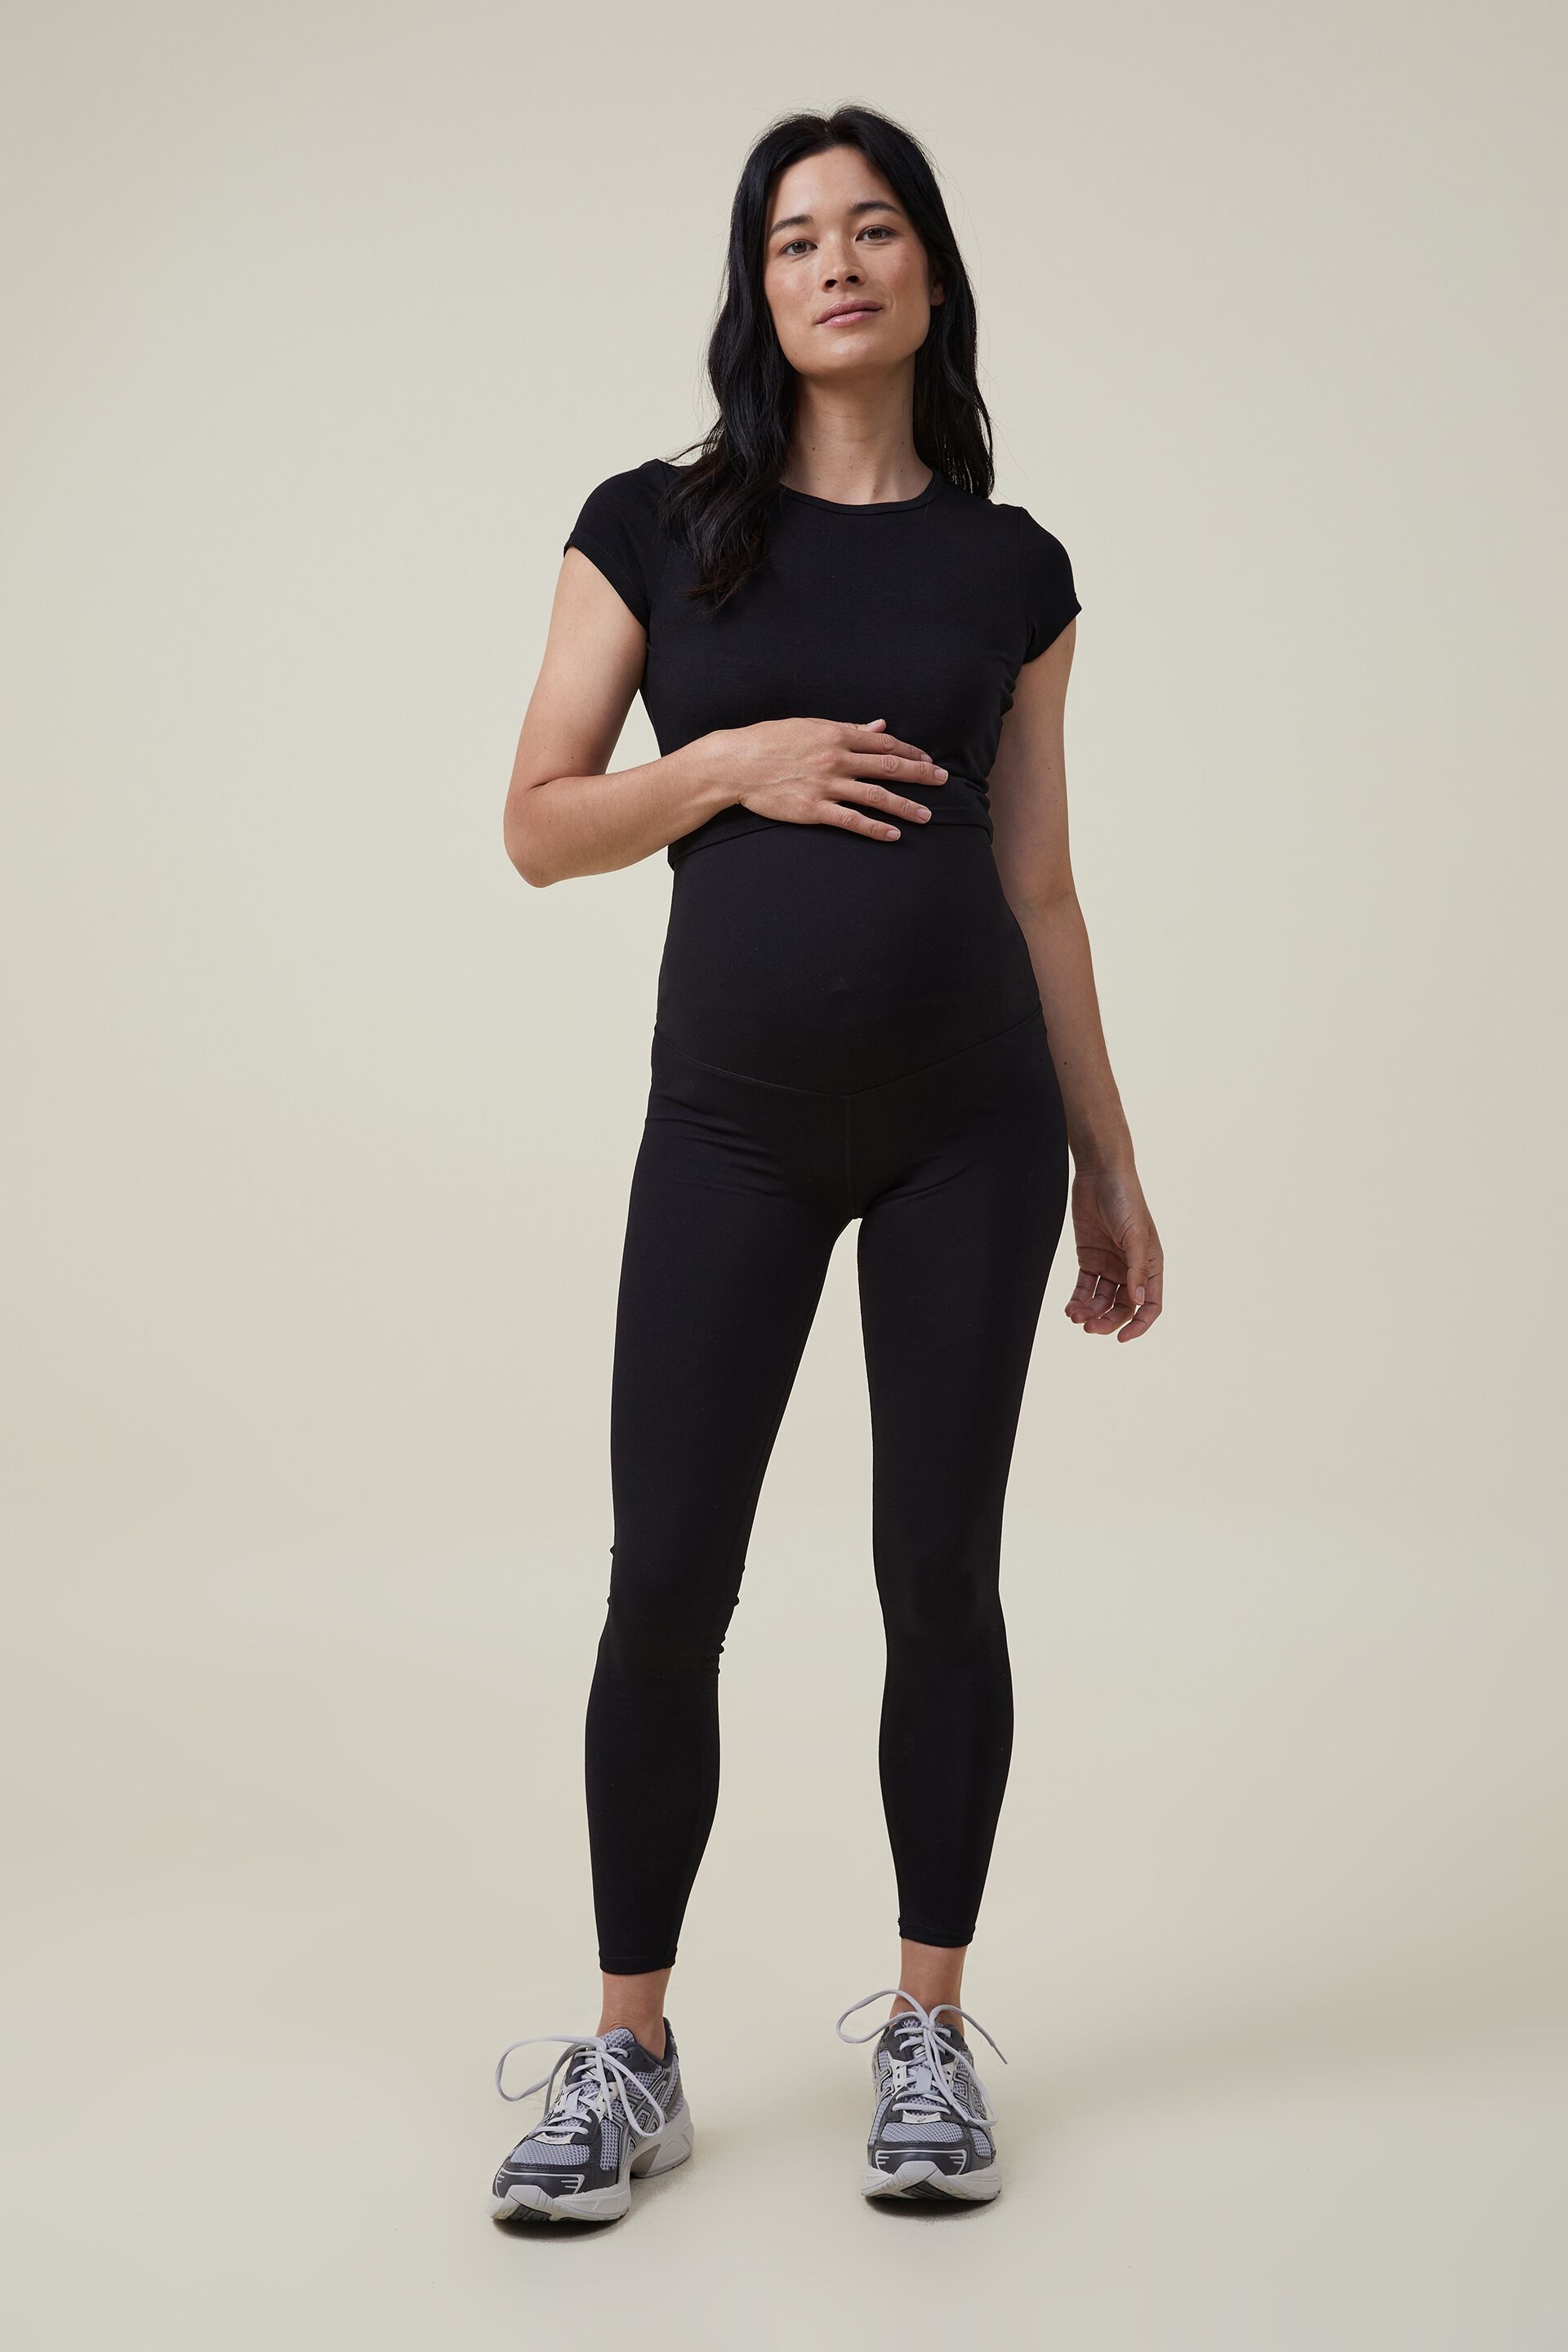 Cotton:On Maternity activewear leggings in black | ASOS